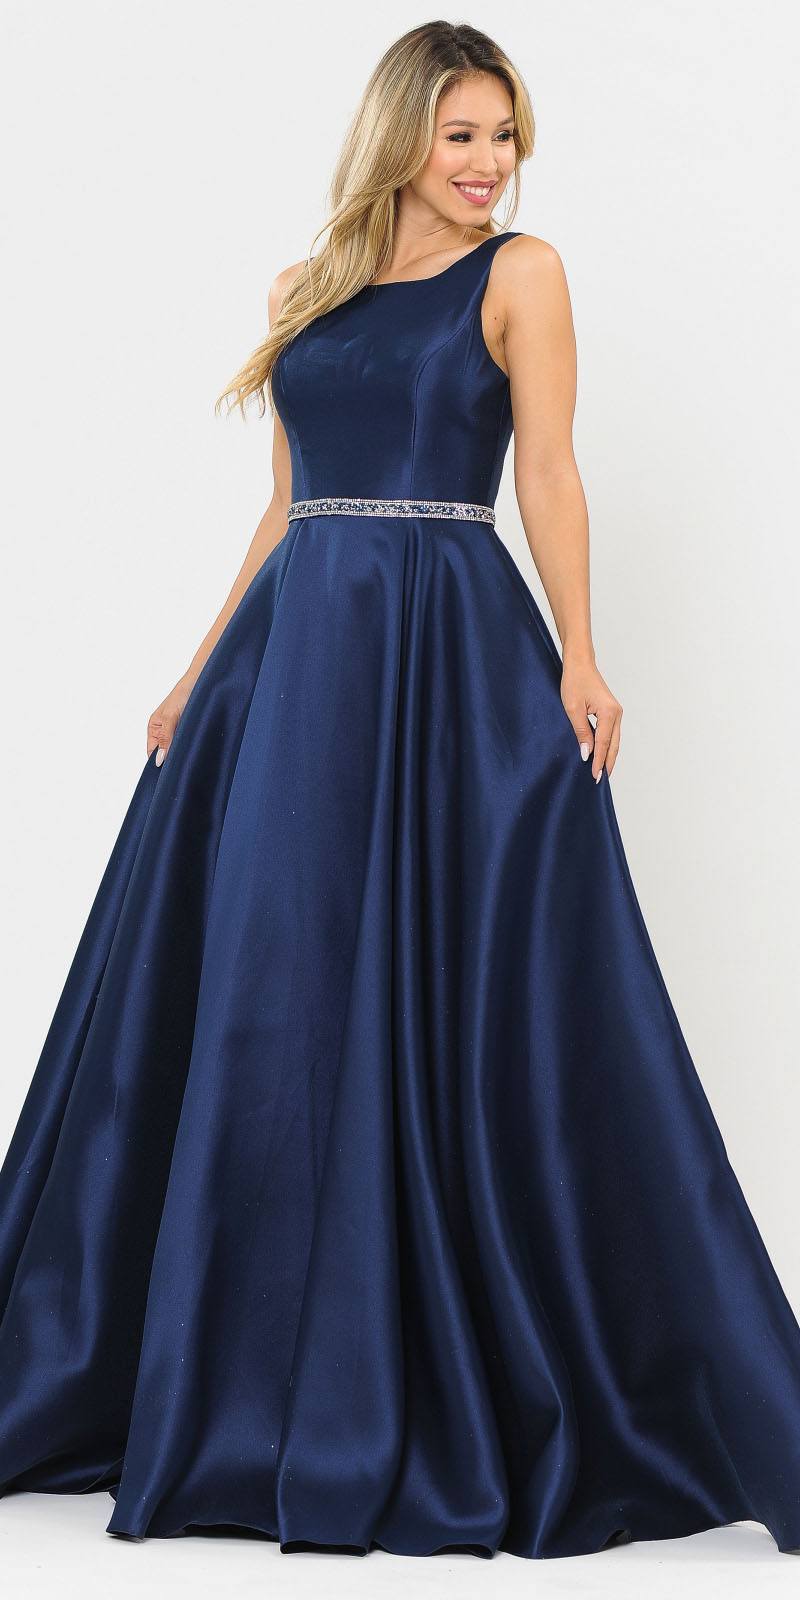 silky navy blue dress